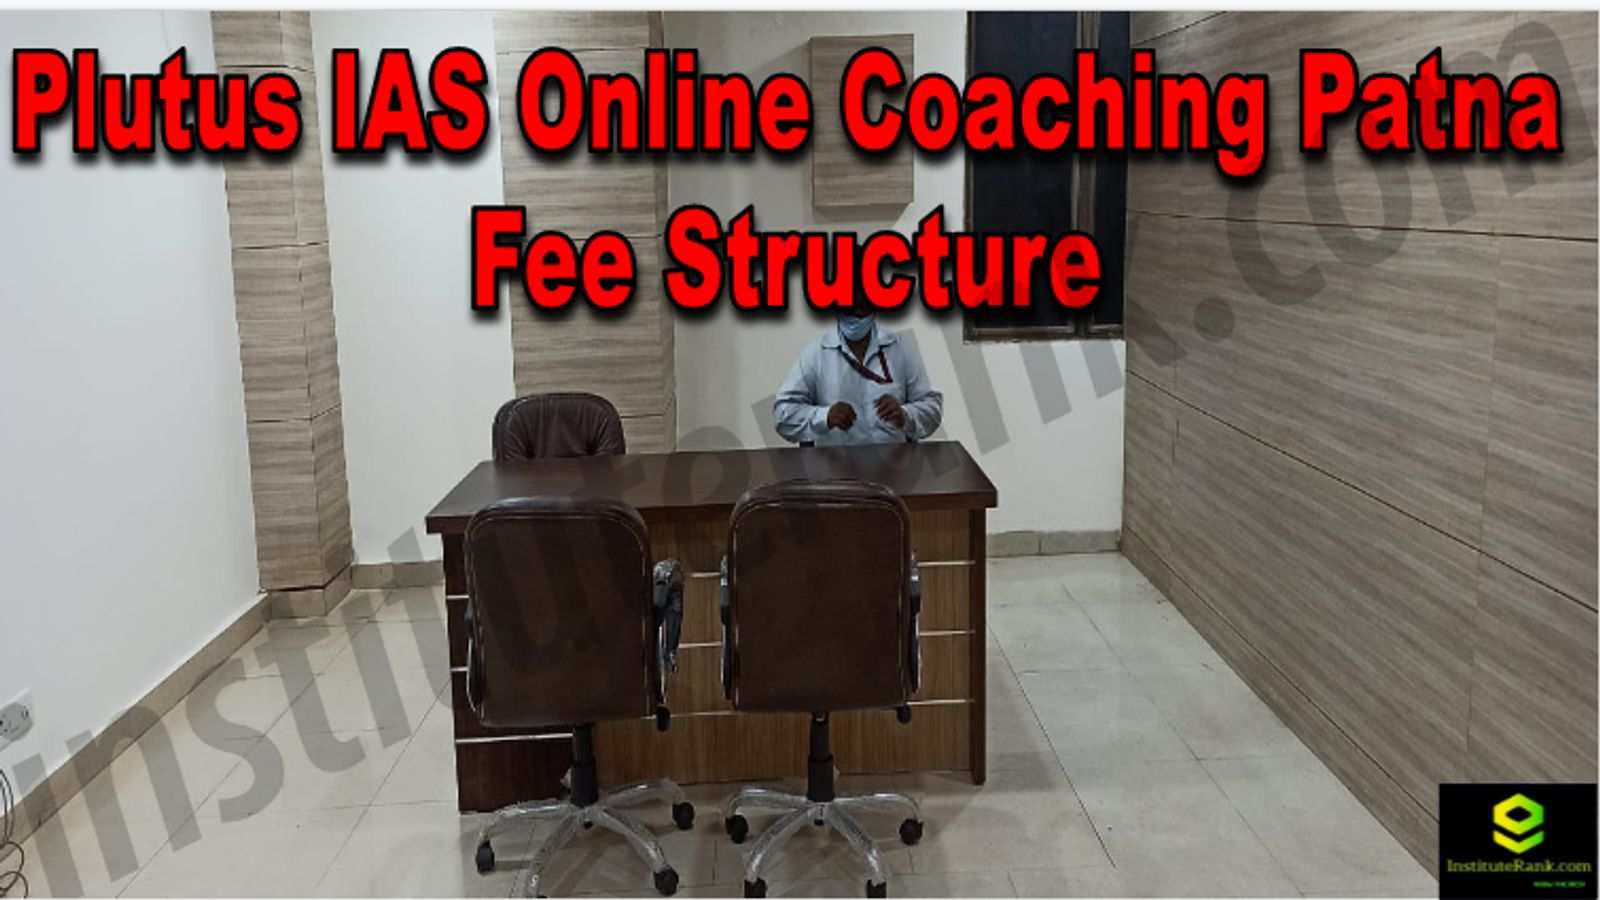 Plutus IAS Online Coaching Patna Reviews Fee Structure